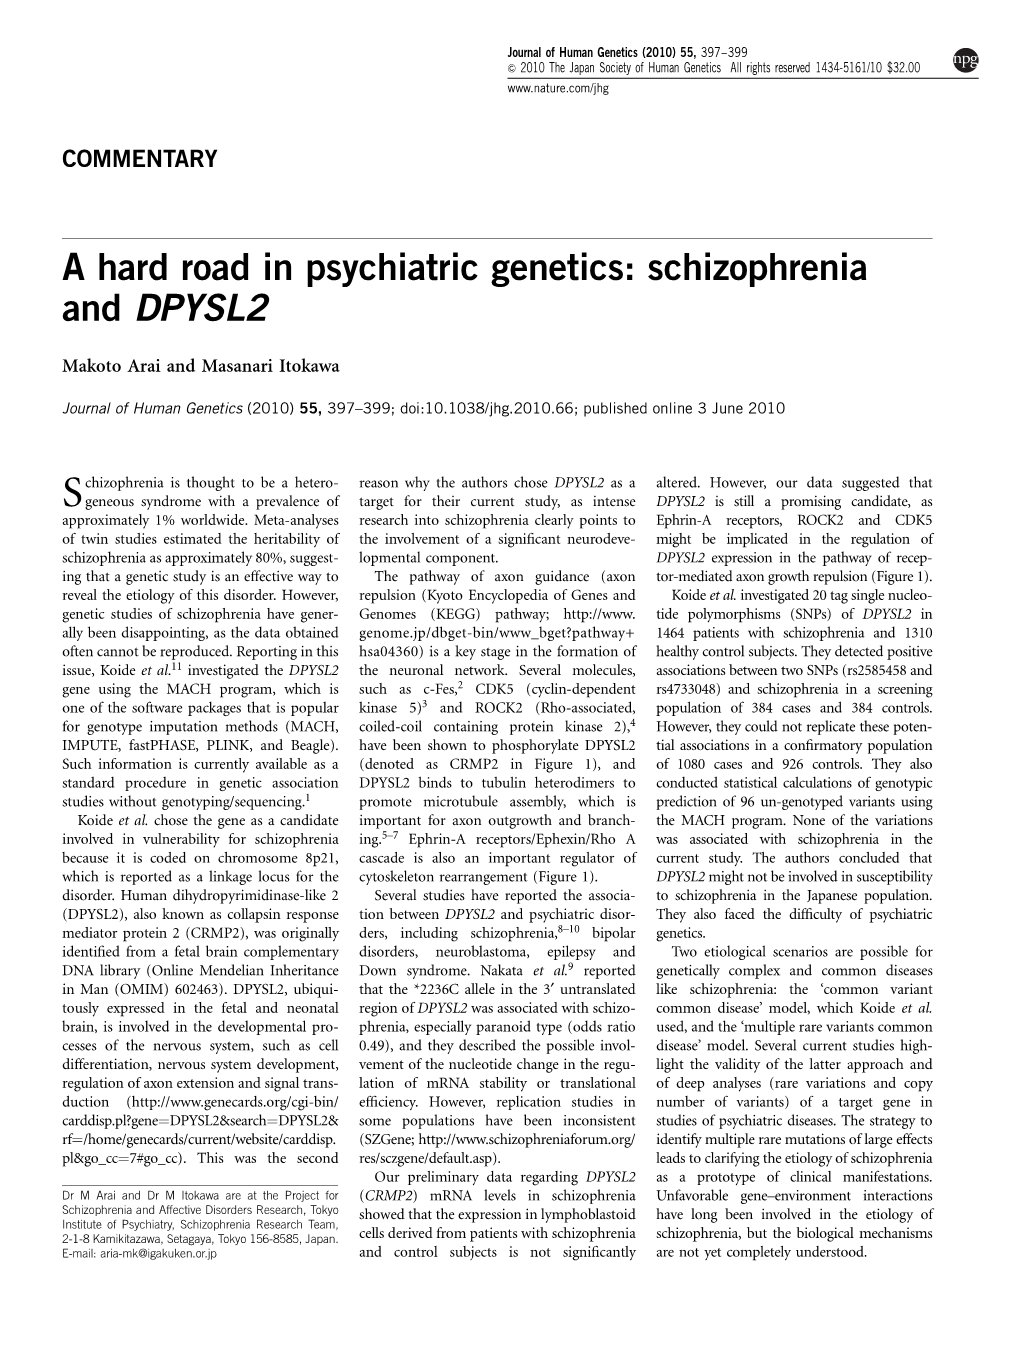 Schizophrenia and DPYSL2